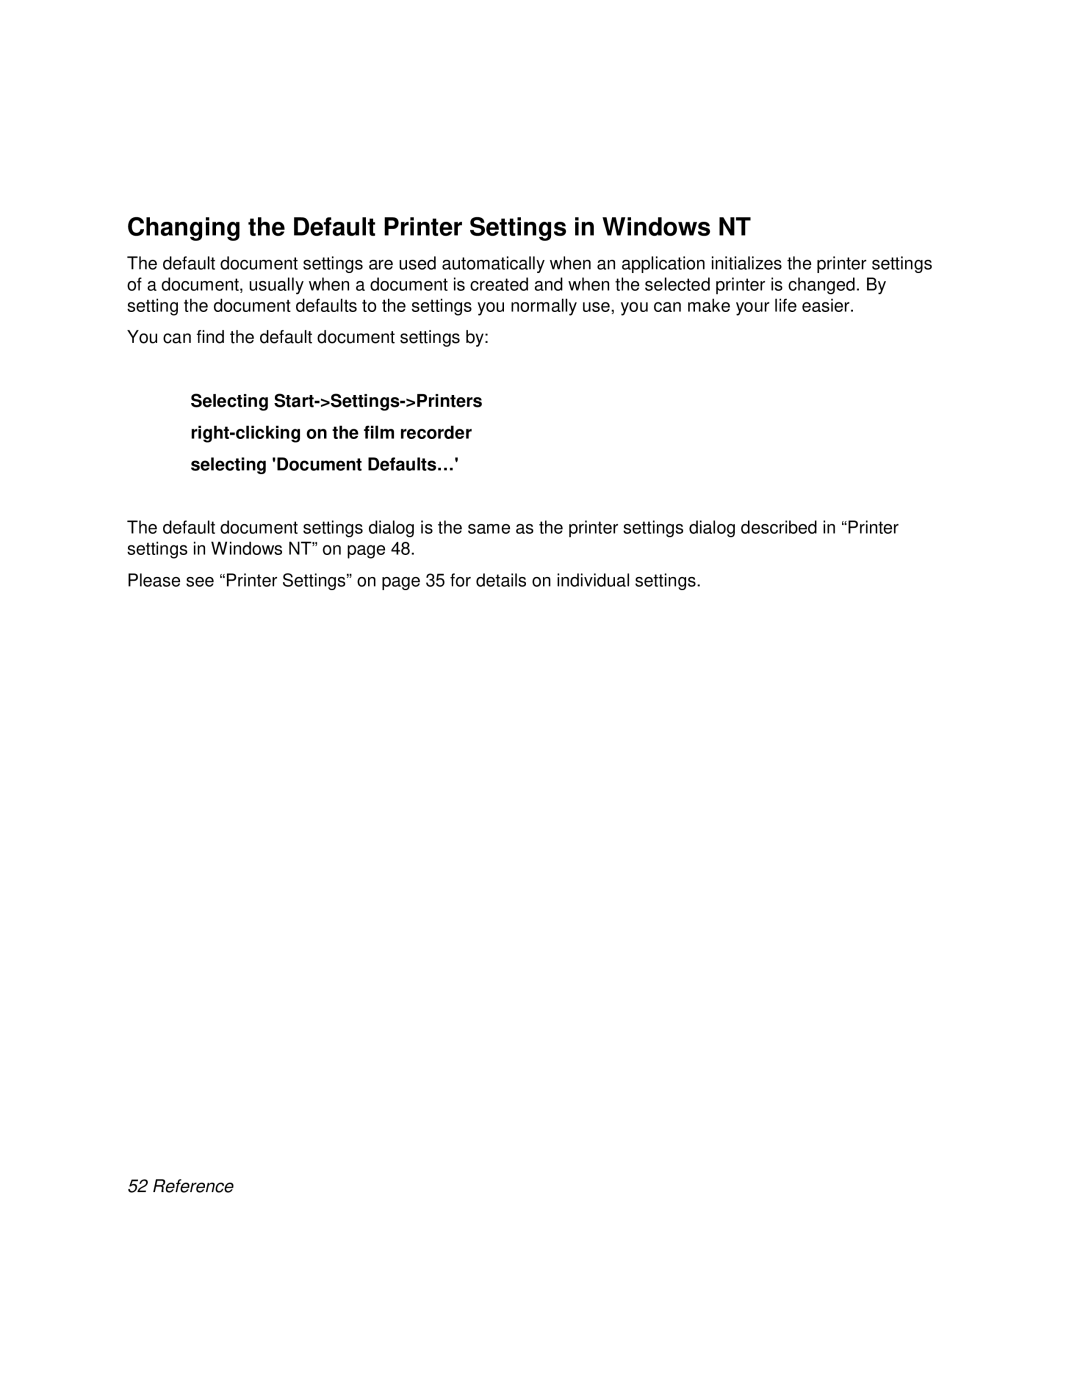 Polaroid BLL Generator manual selecting Document Defaults…, Reference, Selecting Start->Settings->Printers 